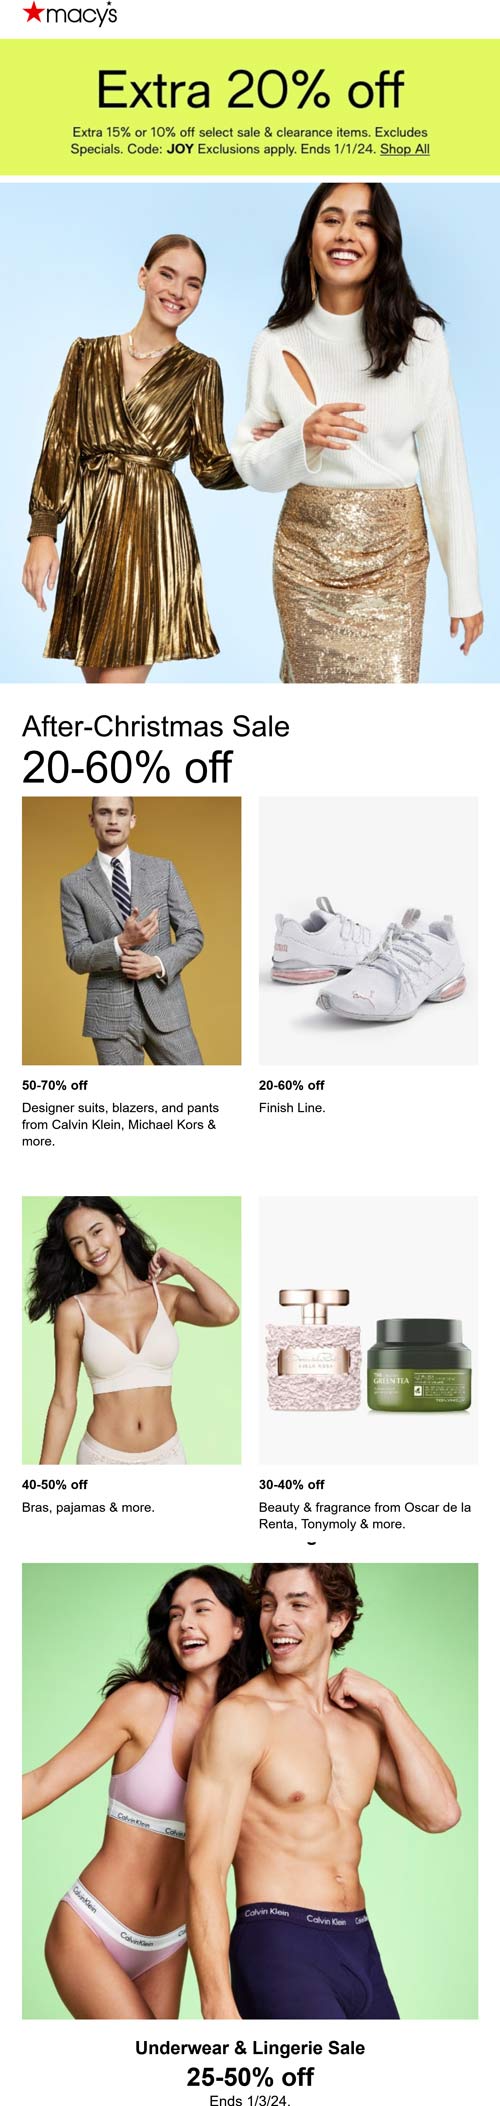 Macys stores Coupon  10-20% off + 25-50% off lingerie at Macys via promo code JOY #macys 